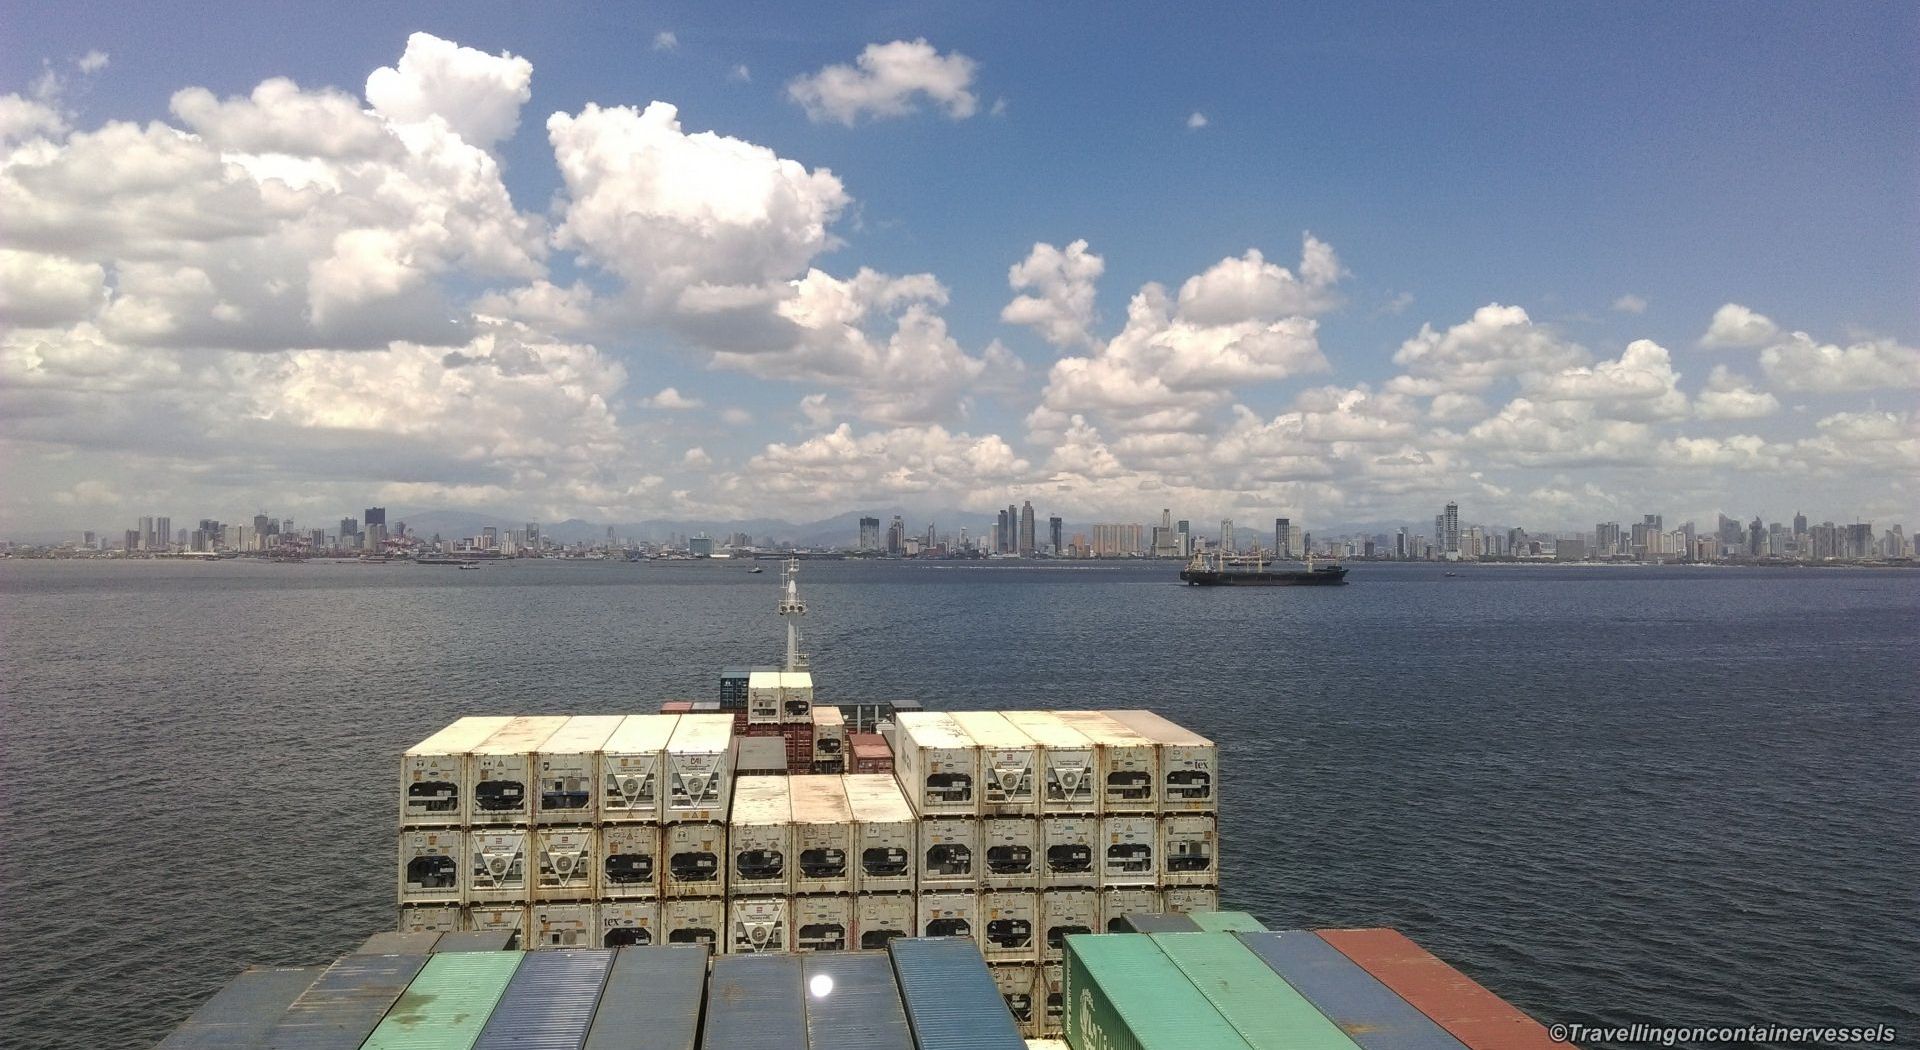 Entering the port of Manila